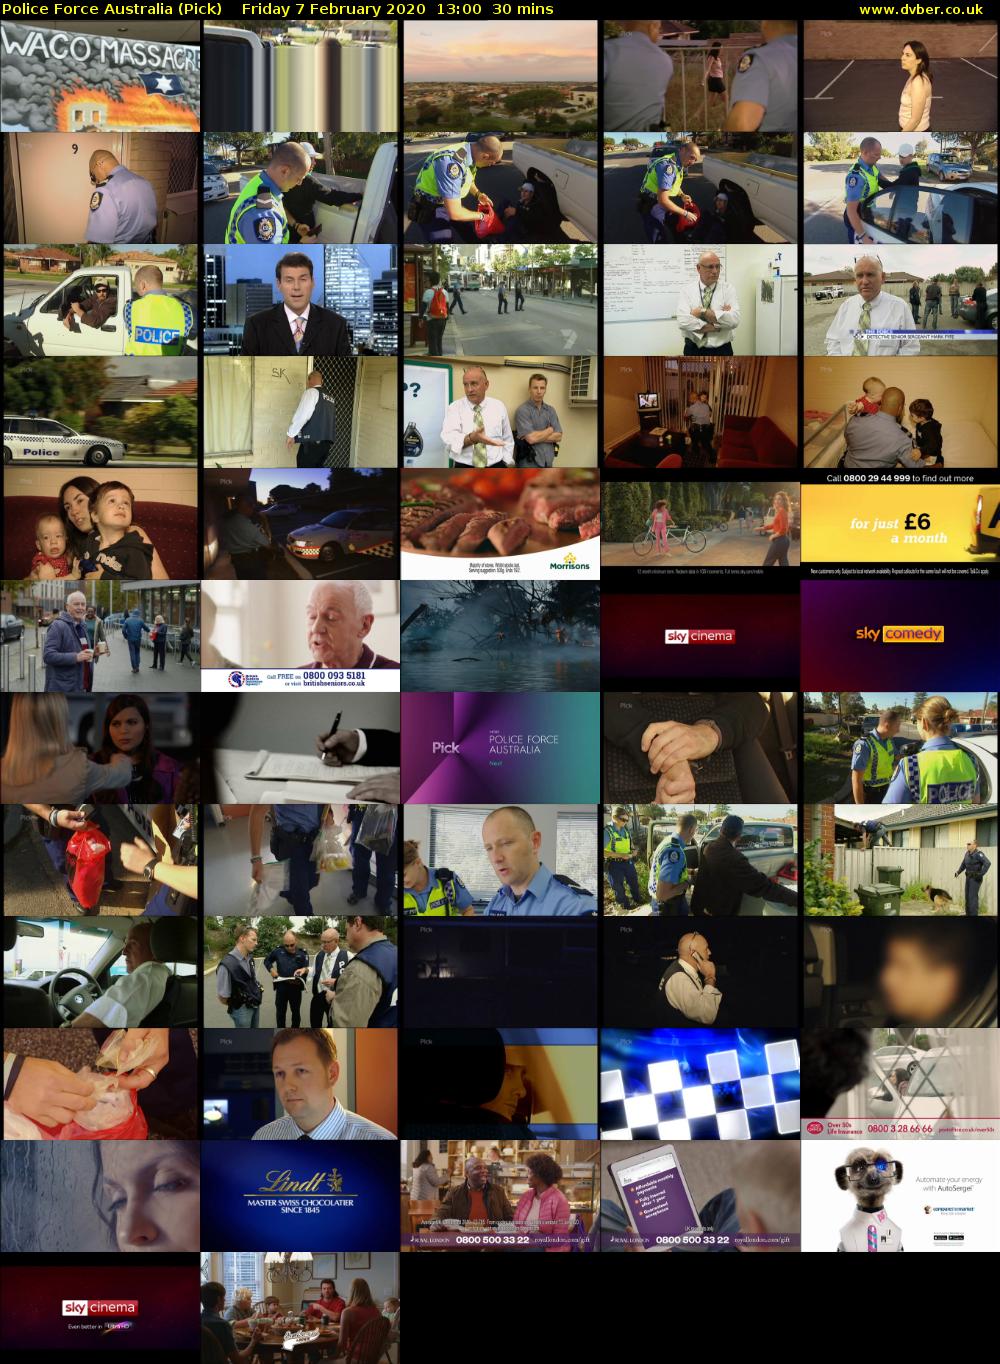 Police Force Australia (Pick) Friday 7 February 2020 13:00 - 13:30